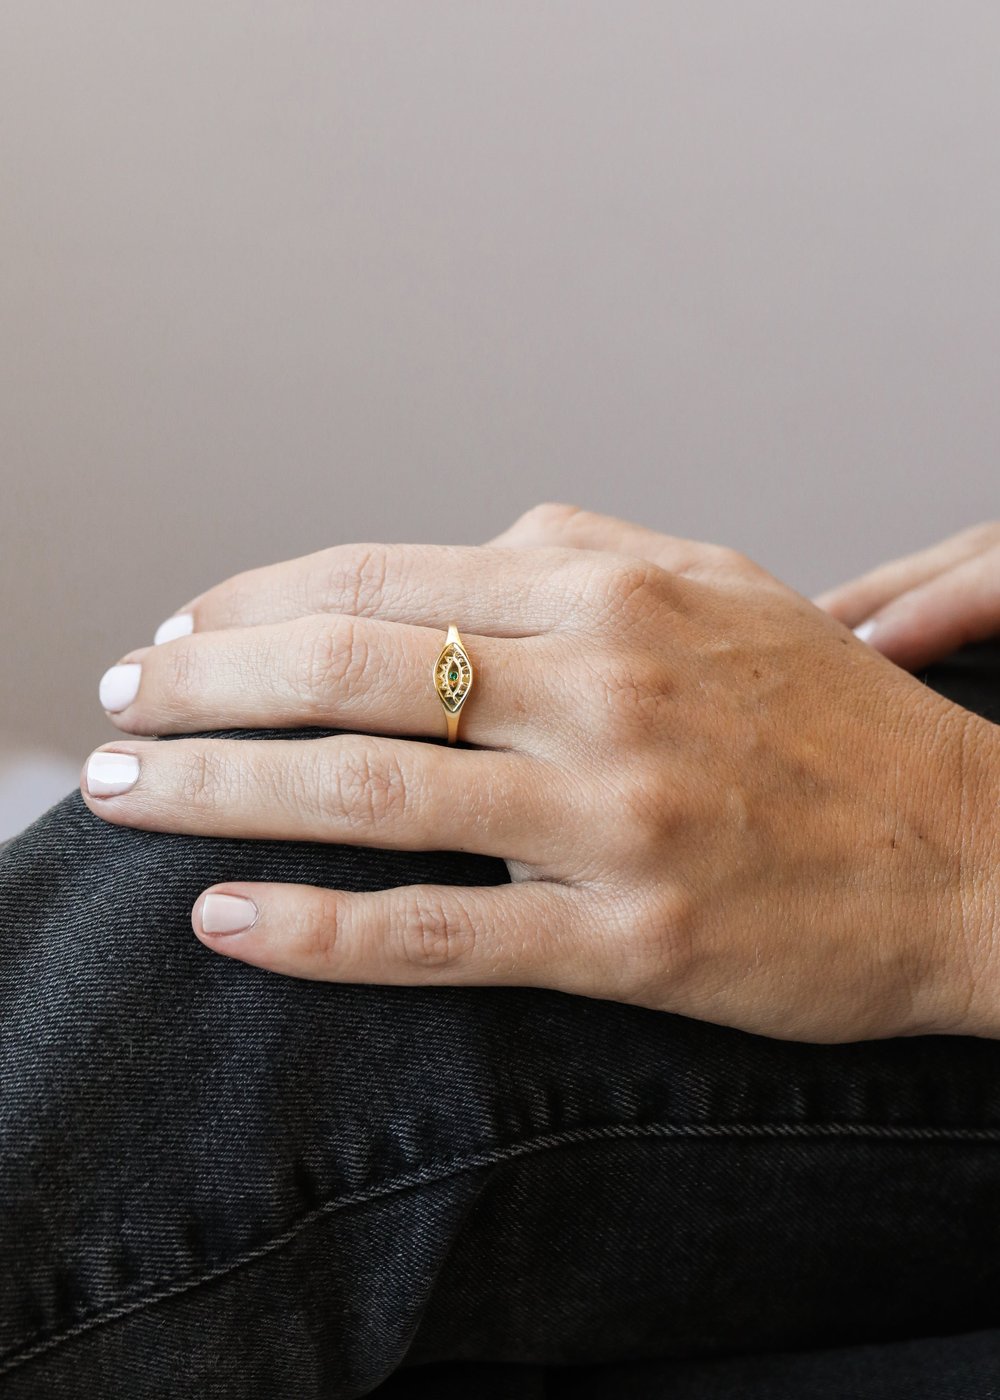 Jewelry Ring Sizer - Dani Barbe Jewelry